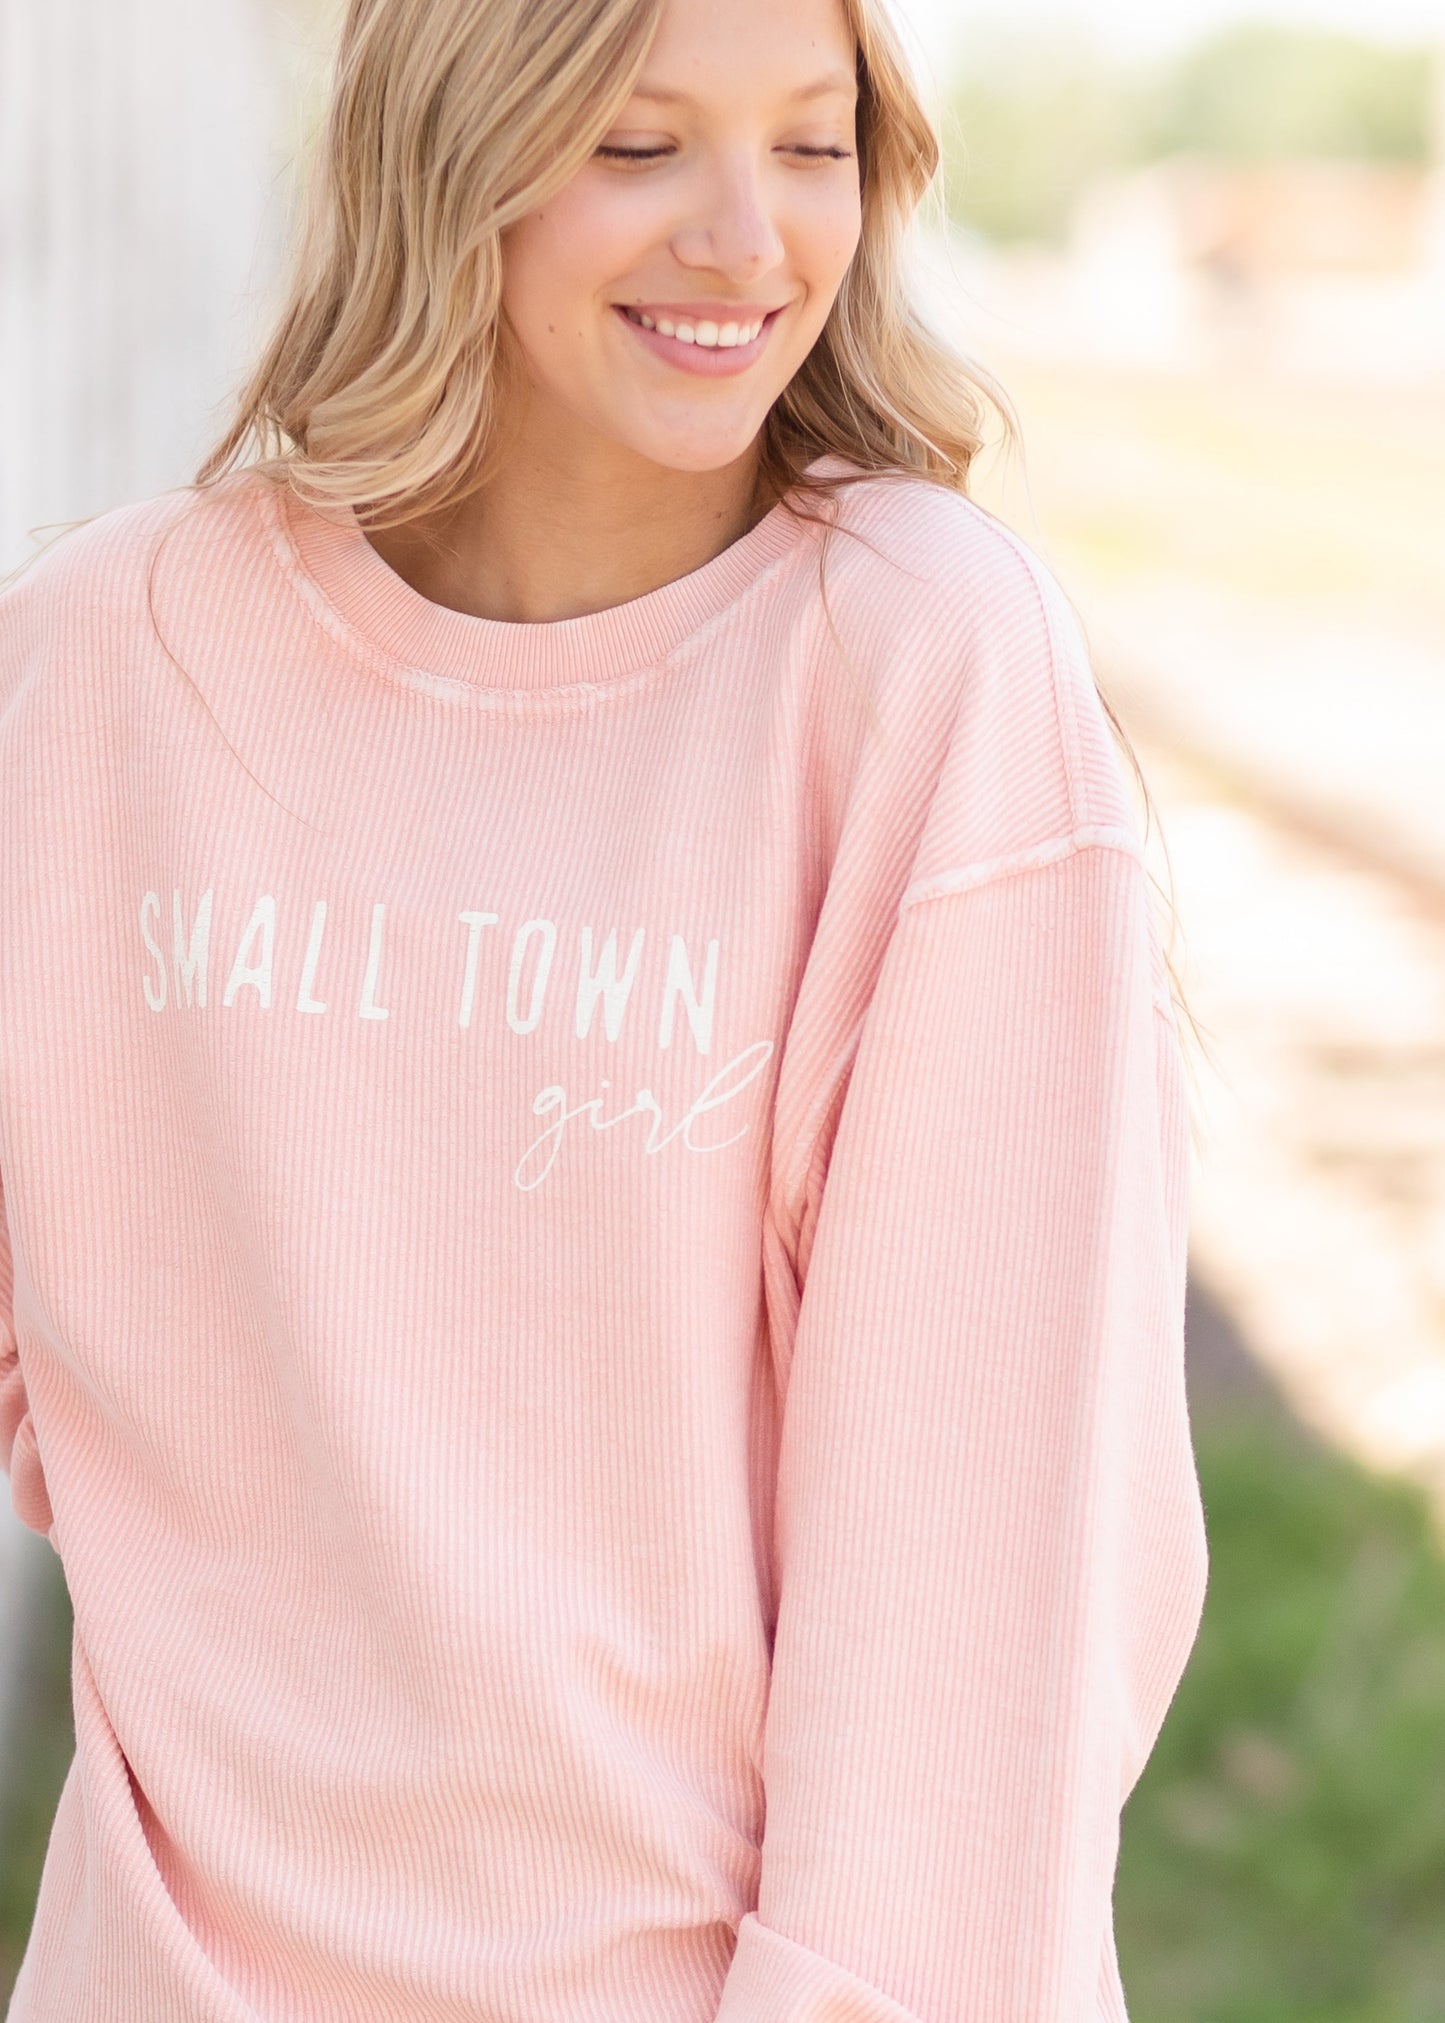 Small Town Girl Crewneck Sweatshirt Tops Pink / S